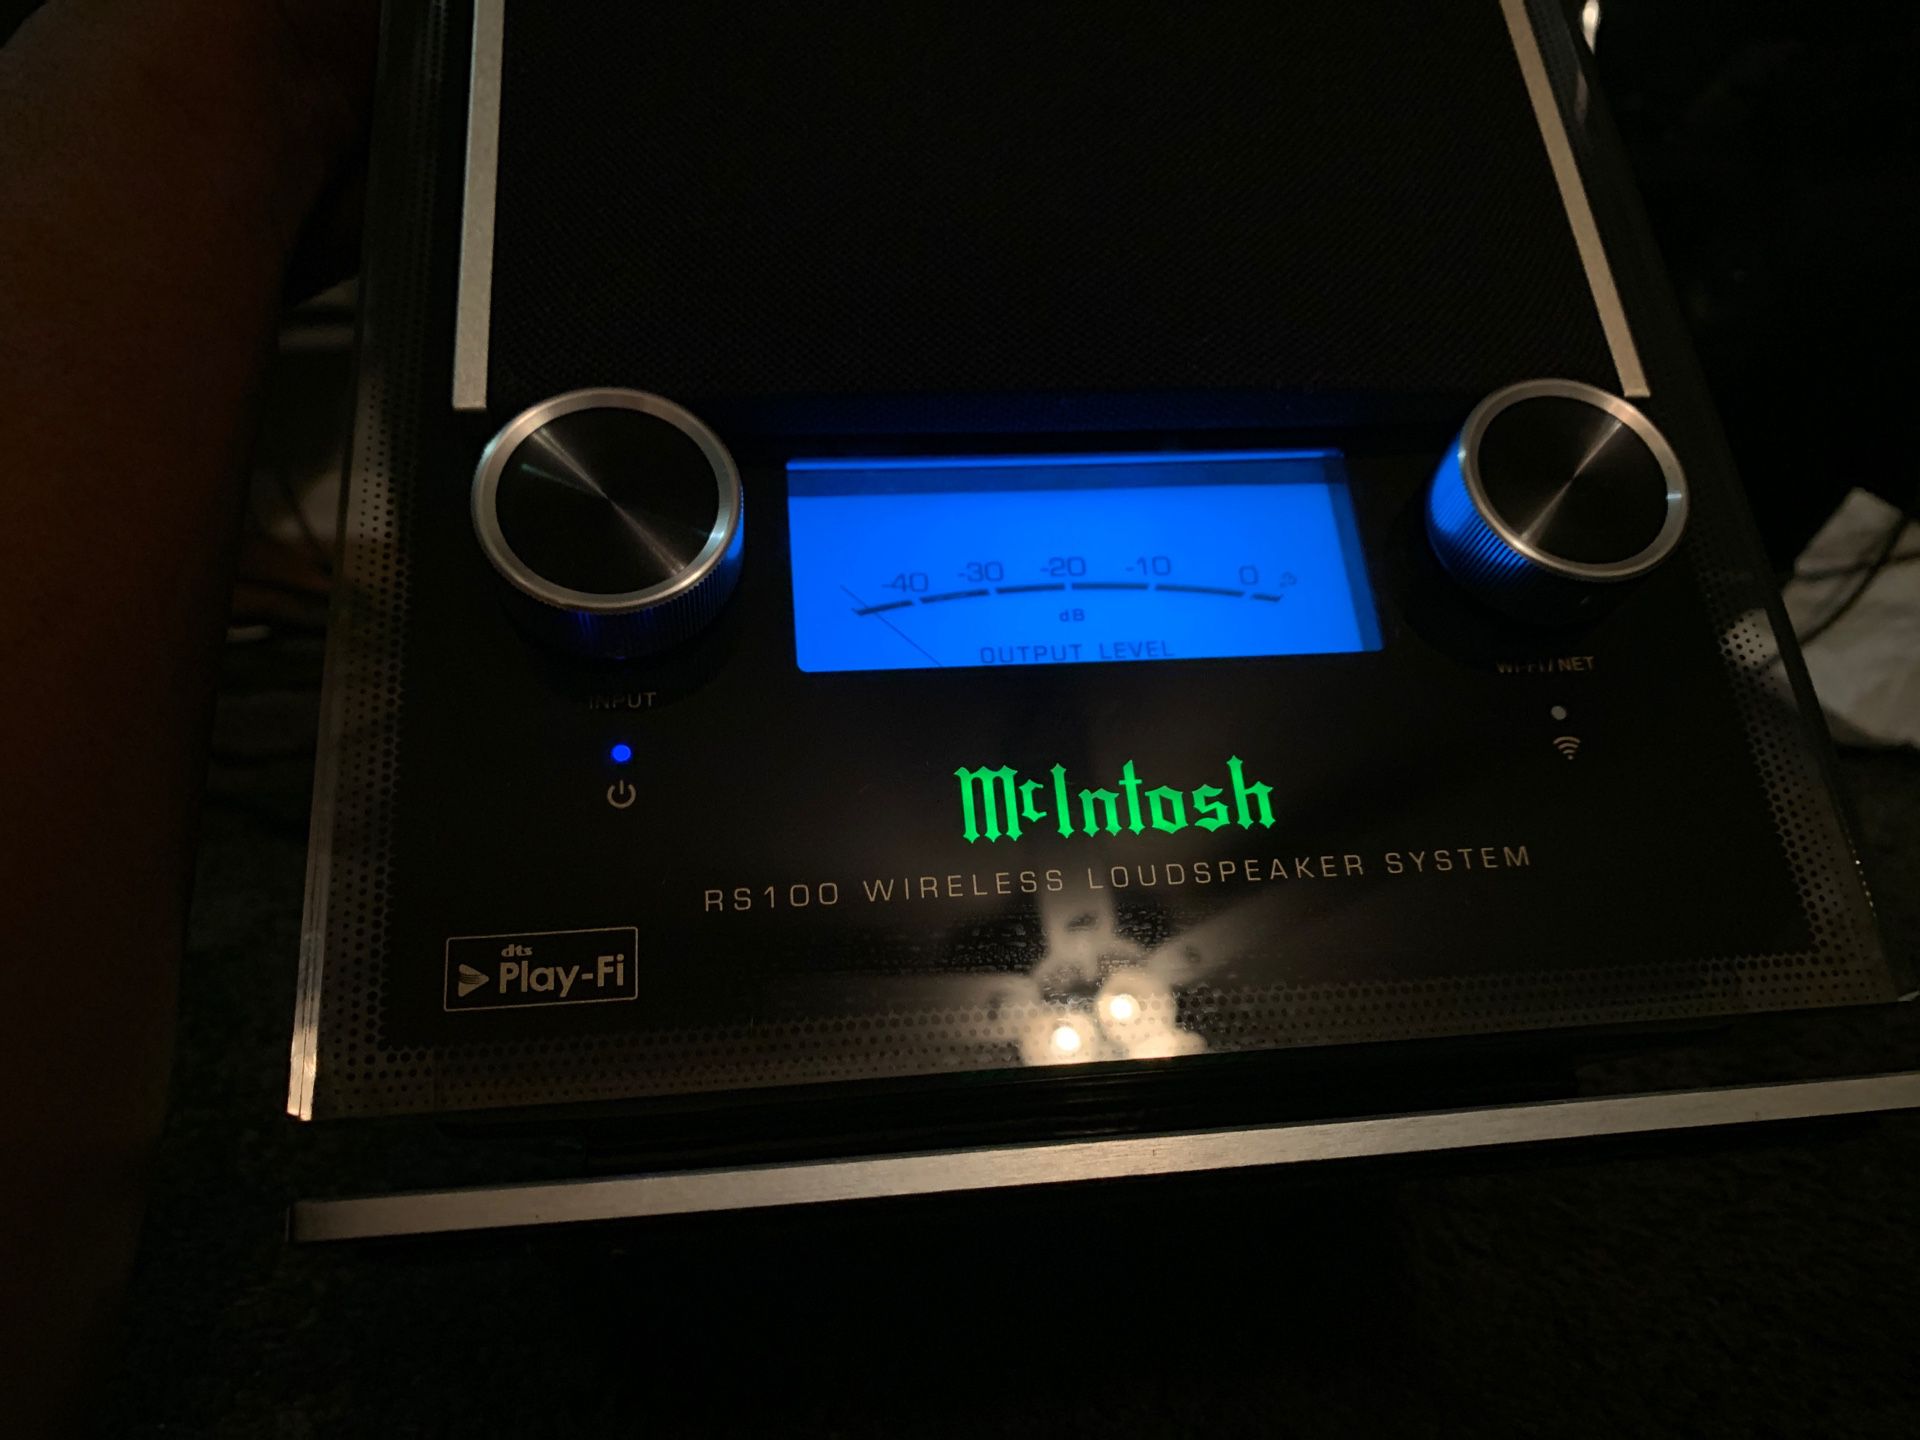 Mcintosh RS100 Wireless Loudspeaker